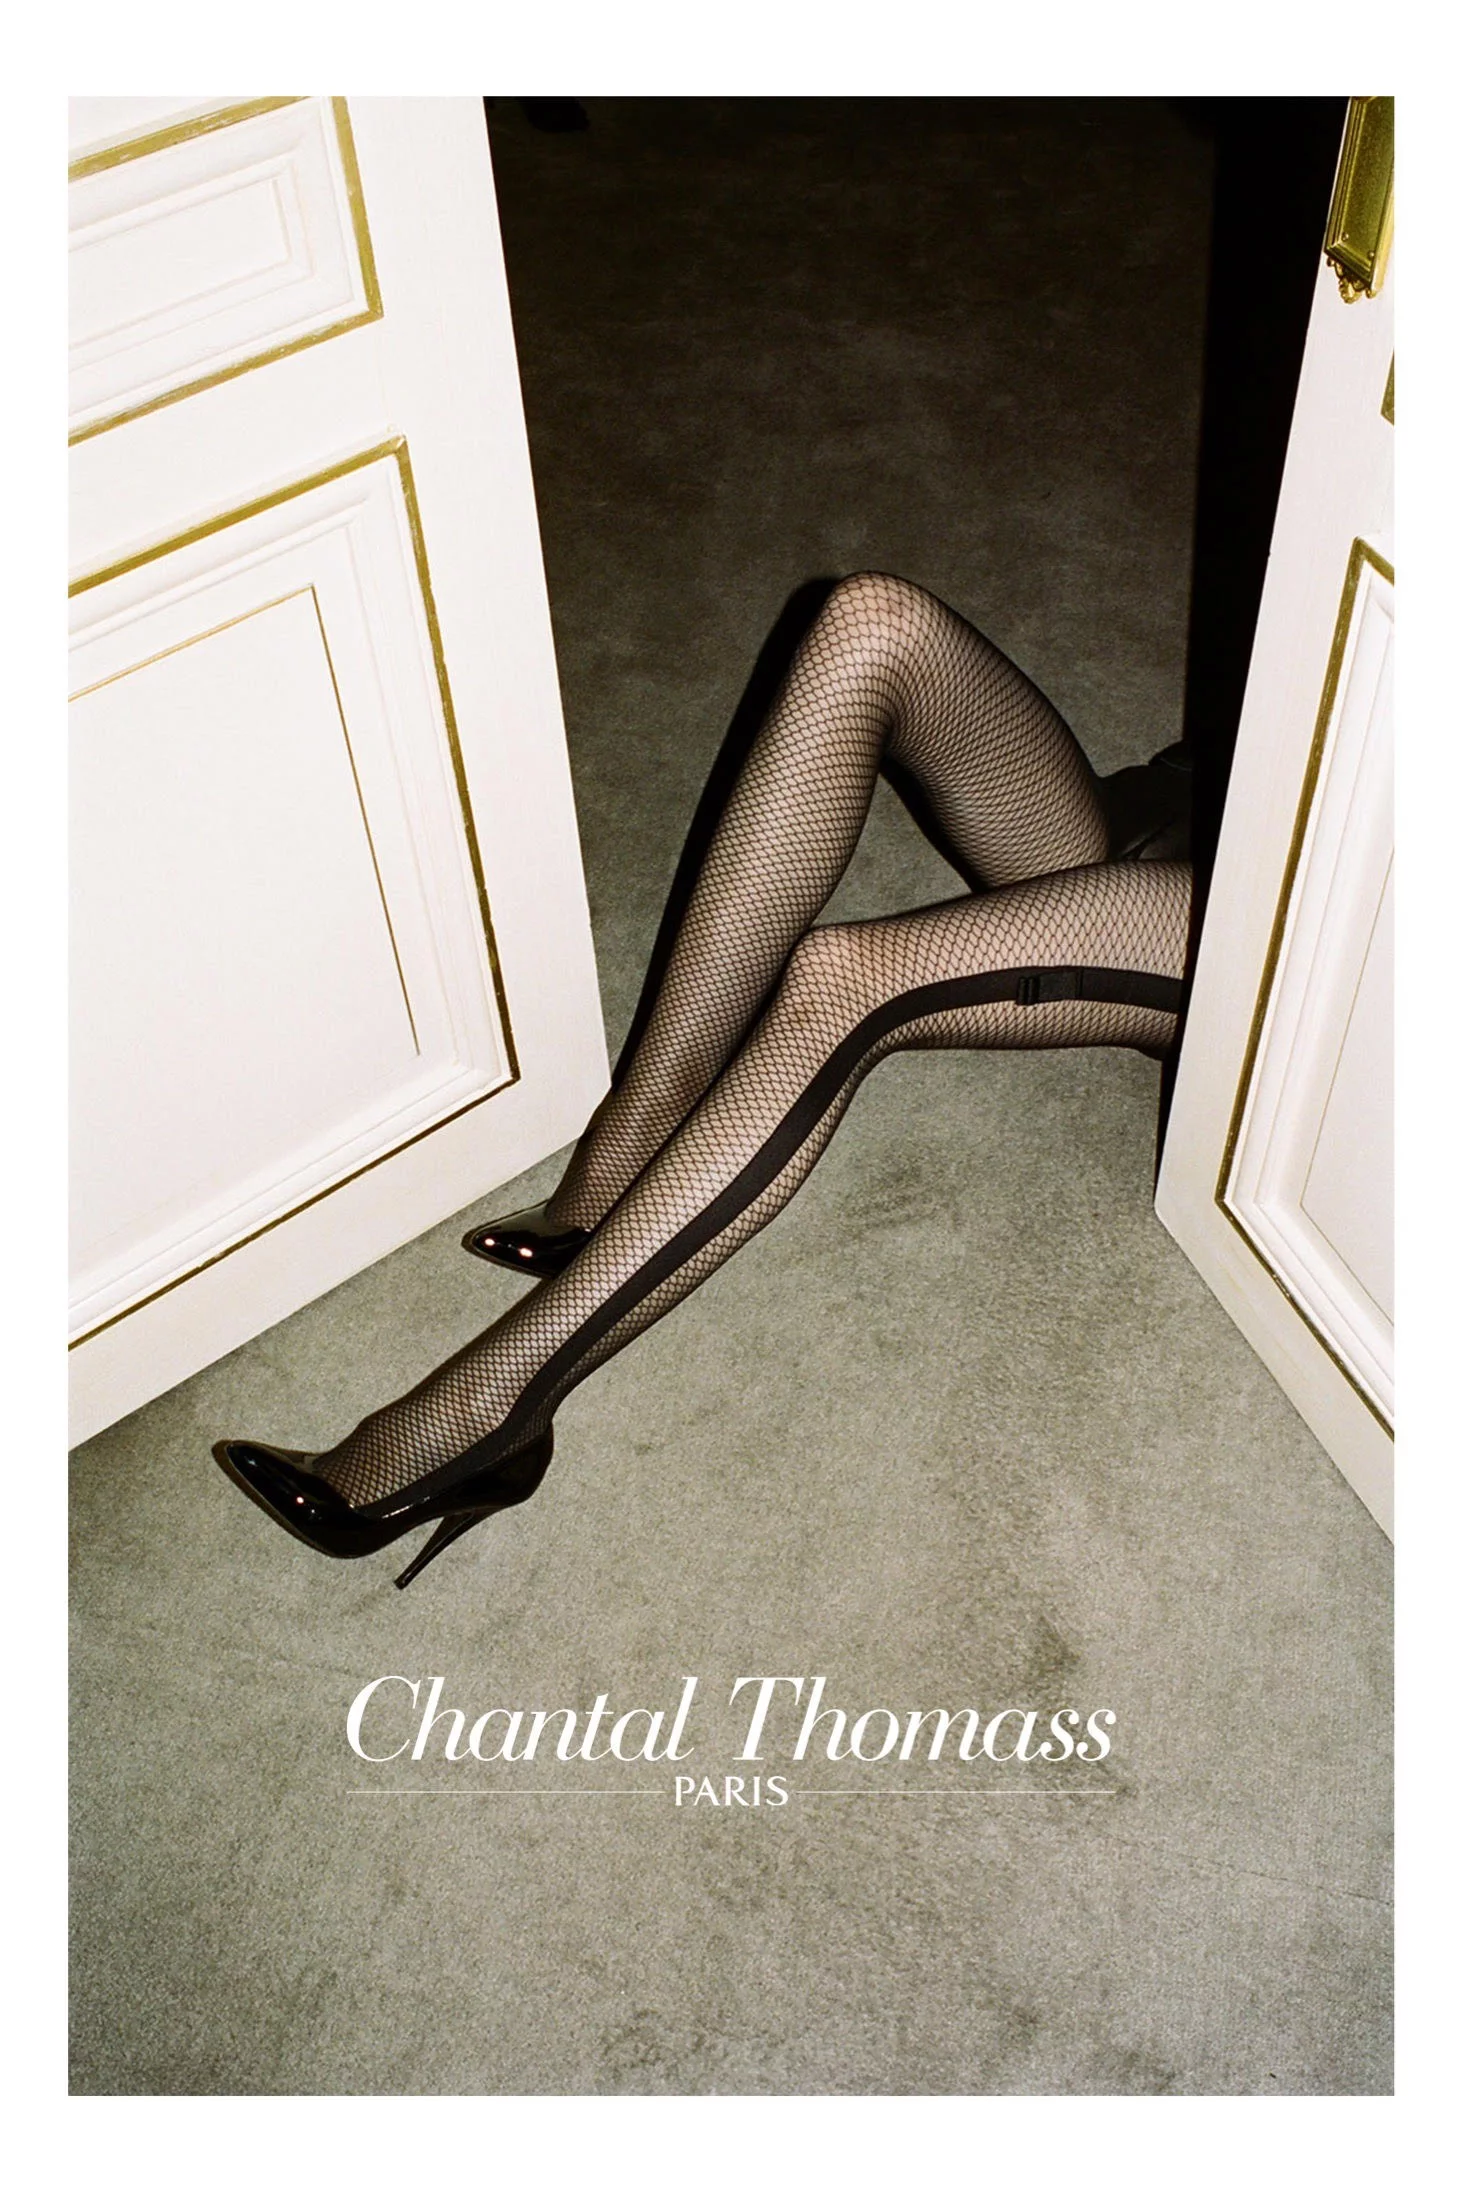 Chantal Thomas 4 by Théophile HERMAND